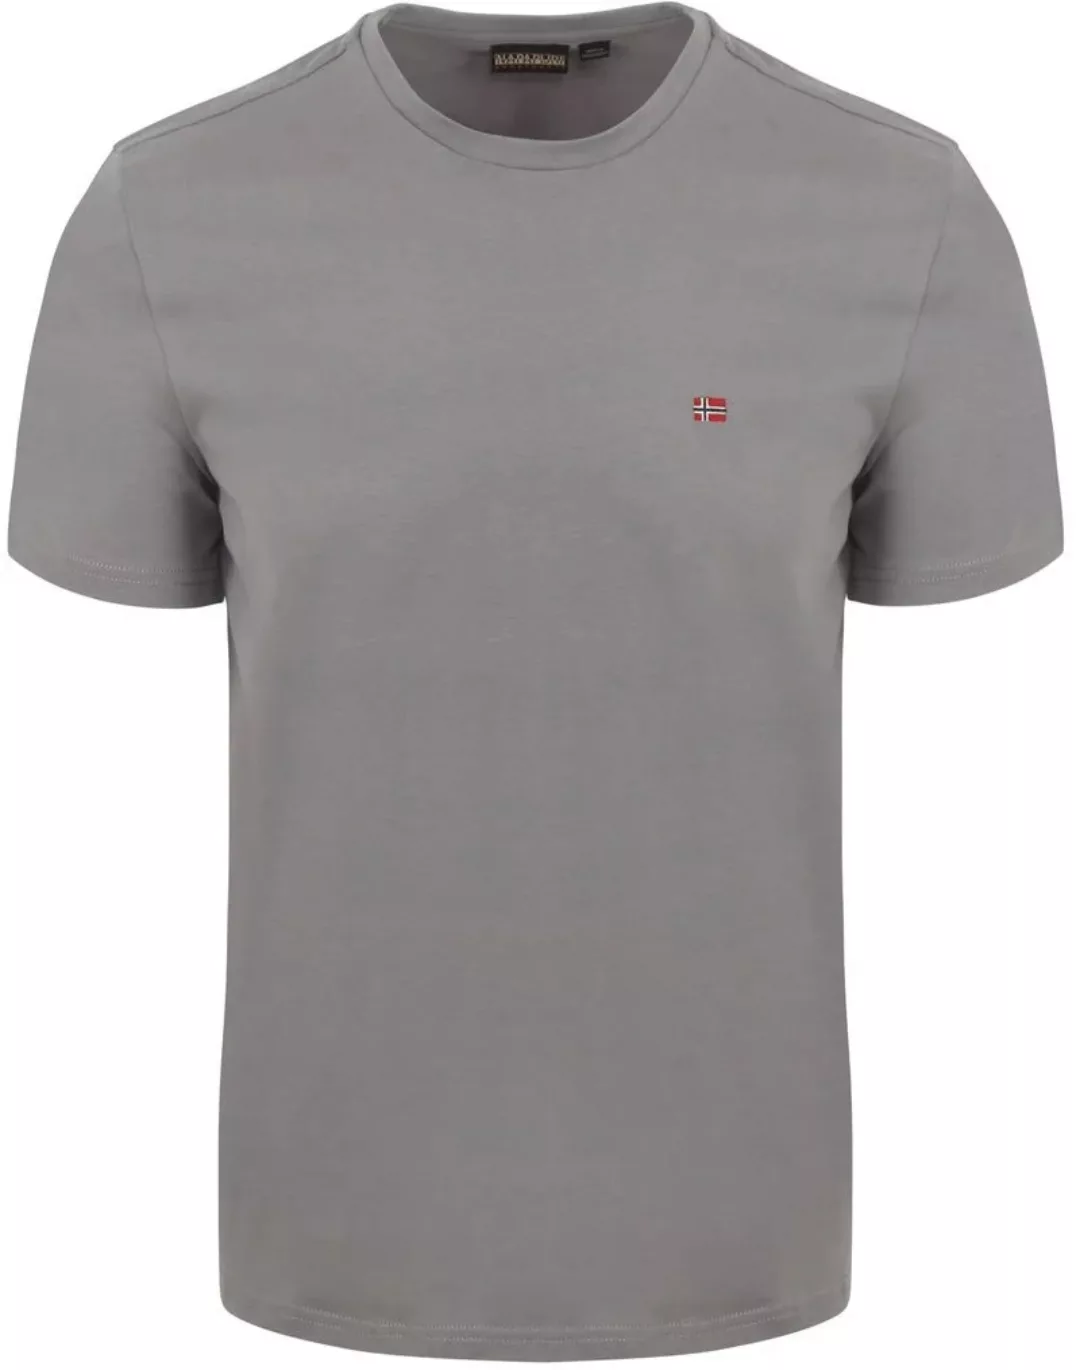 Napapijri Salis T-shirt Mid Grau - Größe M günstig online kaufen